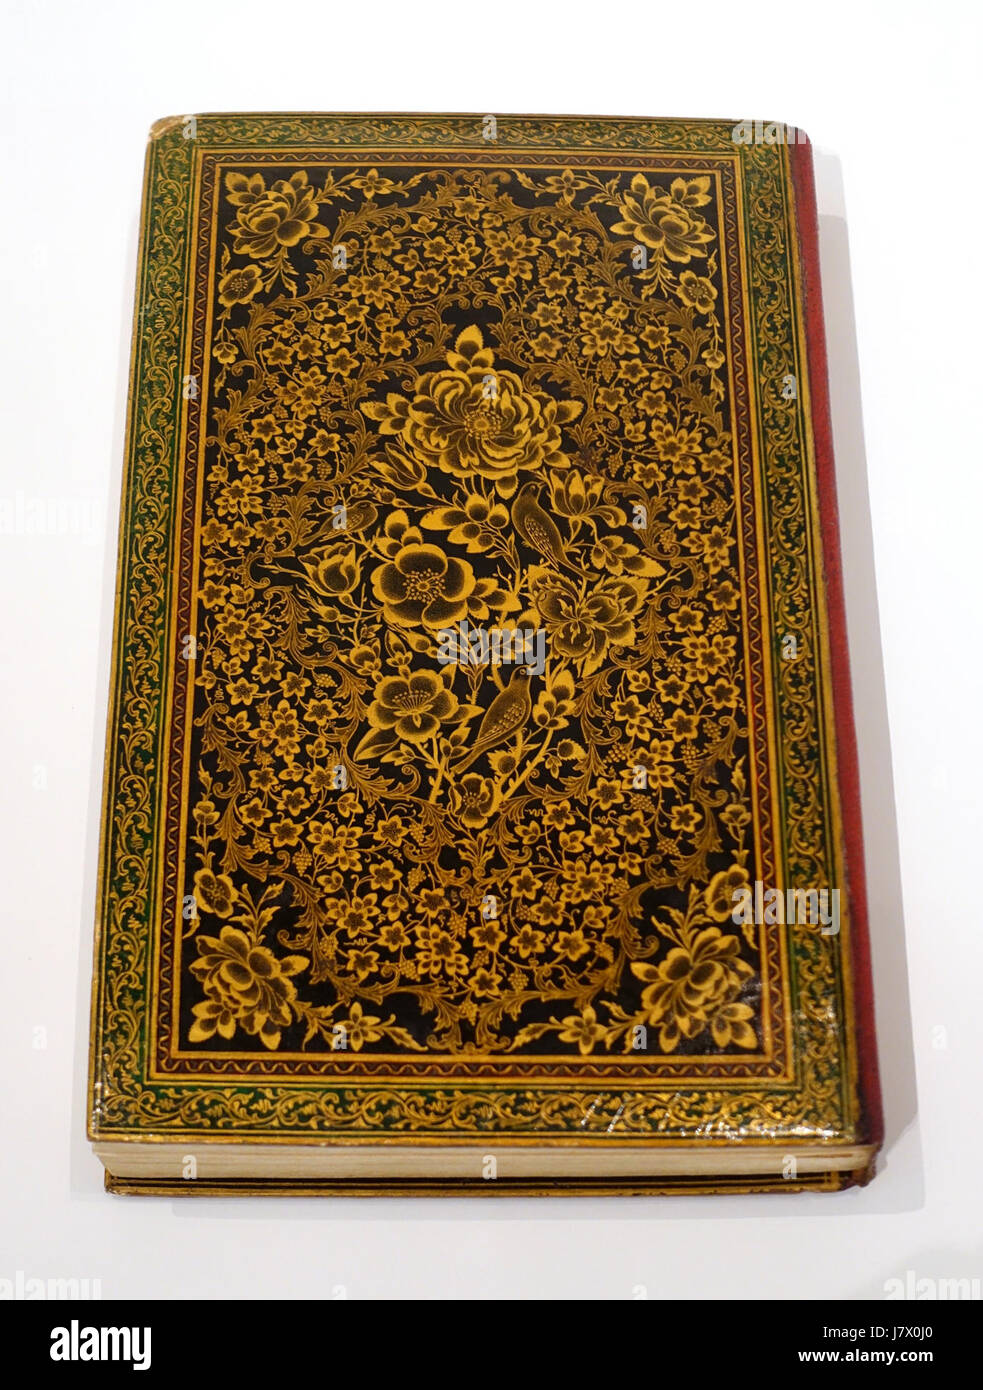 Book binding of Zad al Ma'ad, Iran, 19th century AD, papier mache, oil, paint, gold, lacquer   Aga Khan Museum   Toronto, Canada   DSC07039 Stock Photo